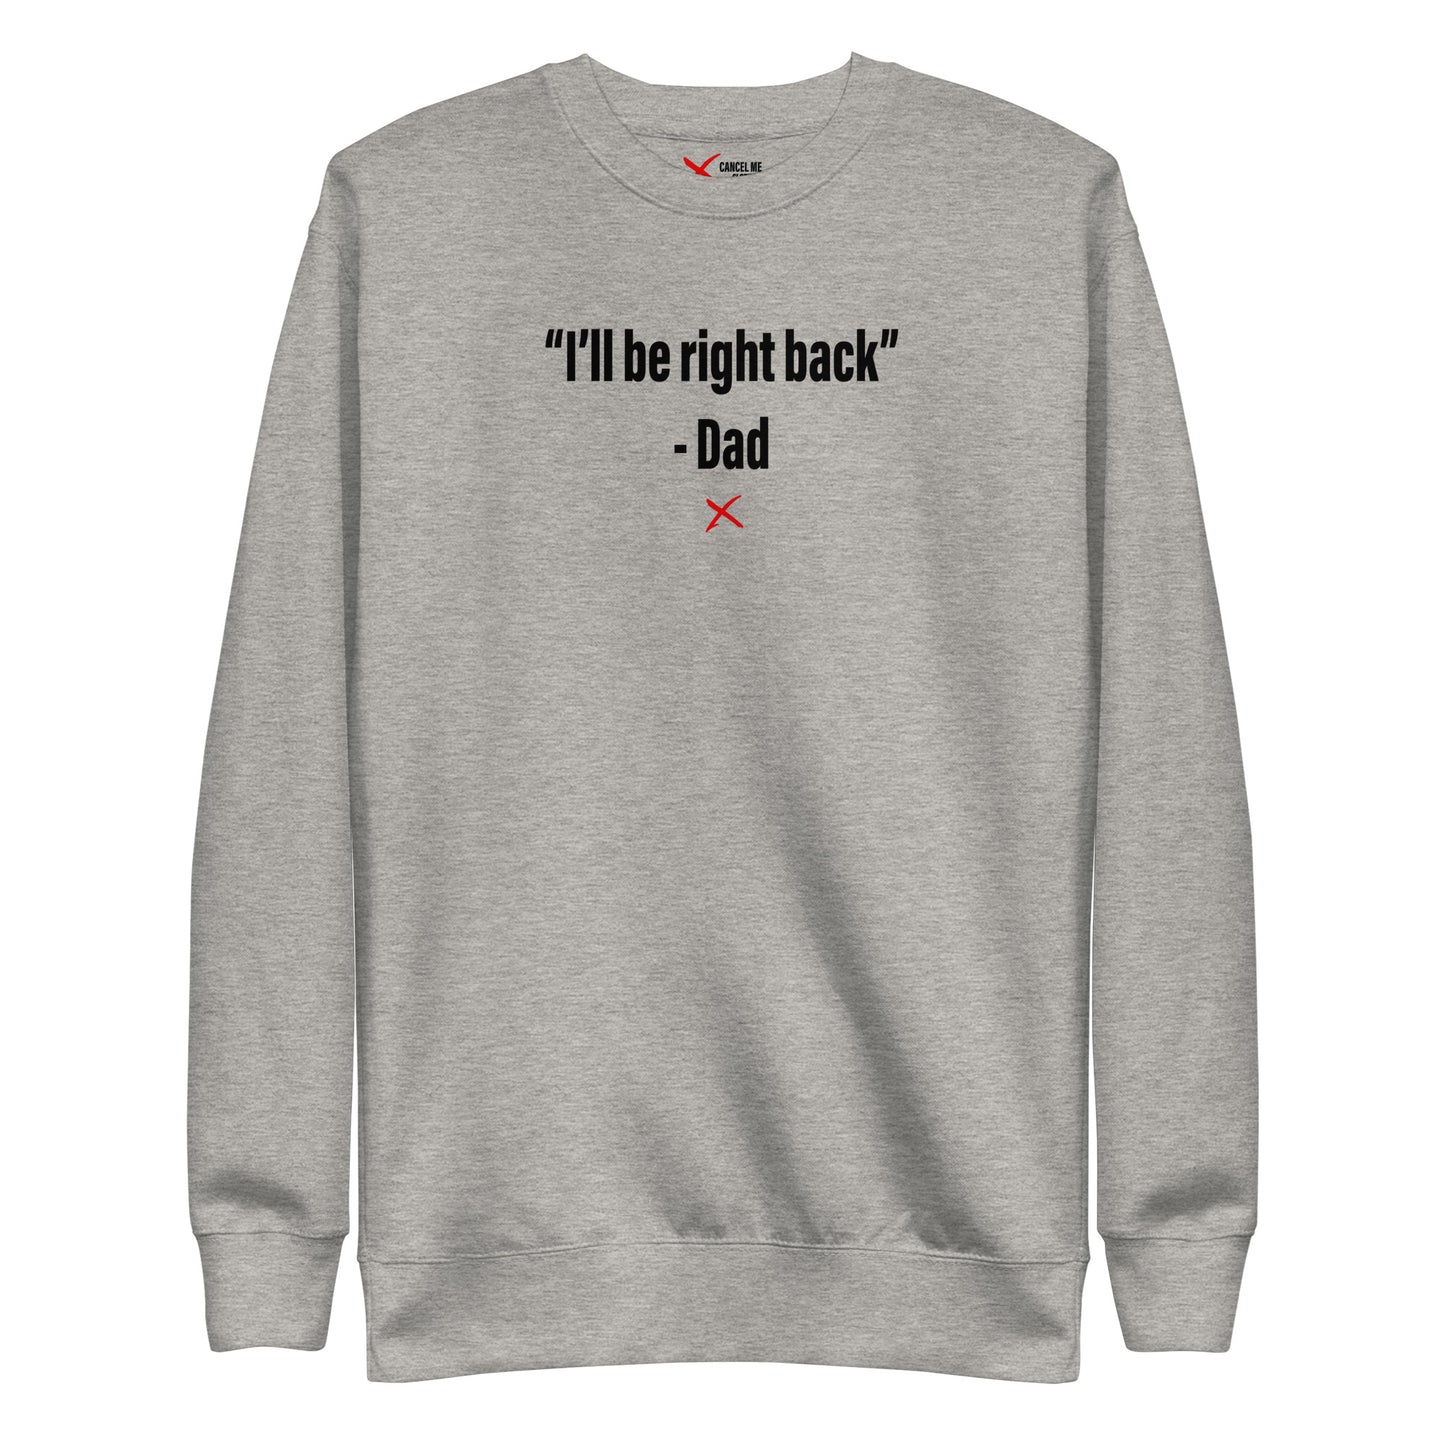 "I'll be right back" - Dad - Sweatshirt